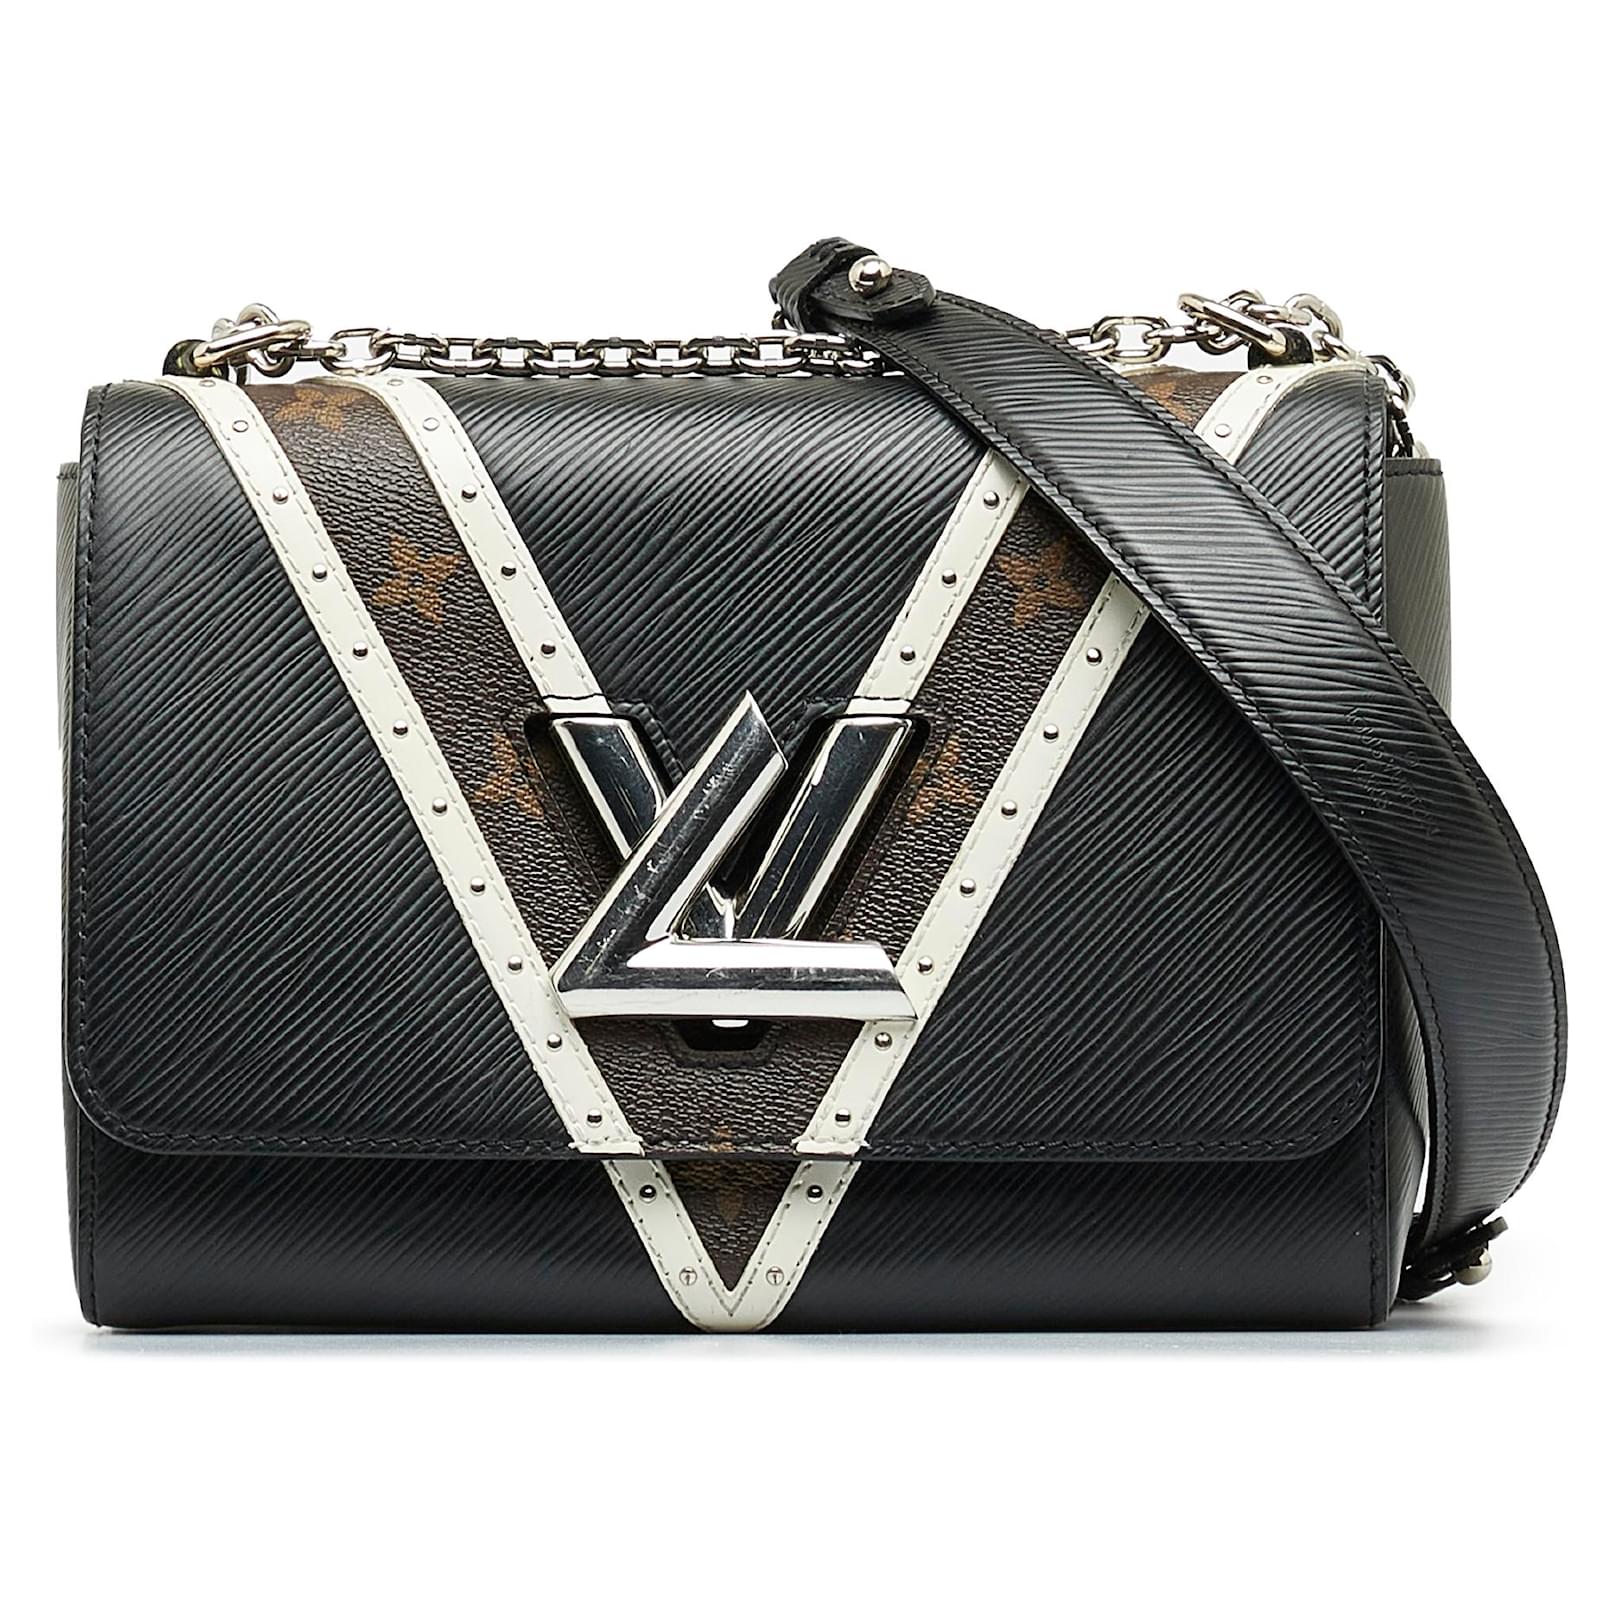 Bolso de hombro Louis Vuitton negro cuero EPI twist PM